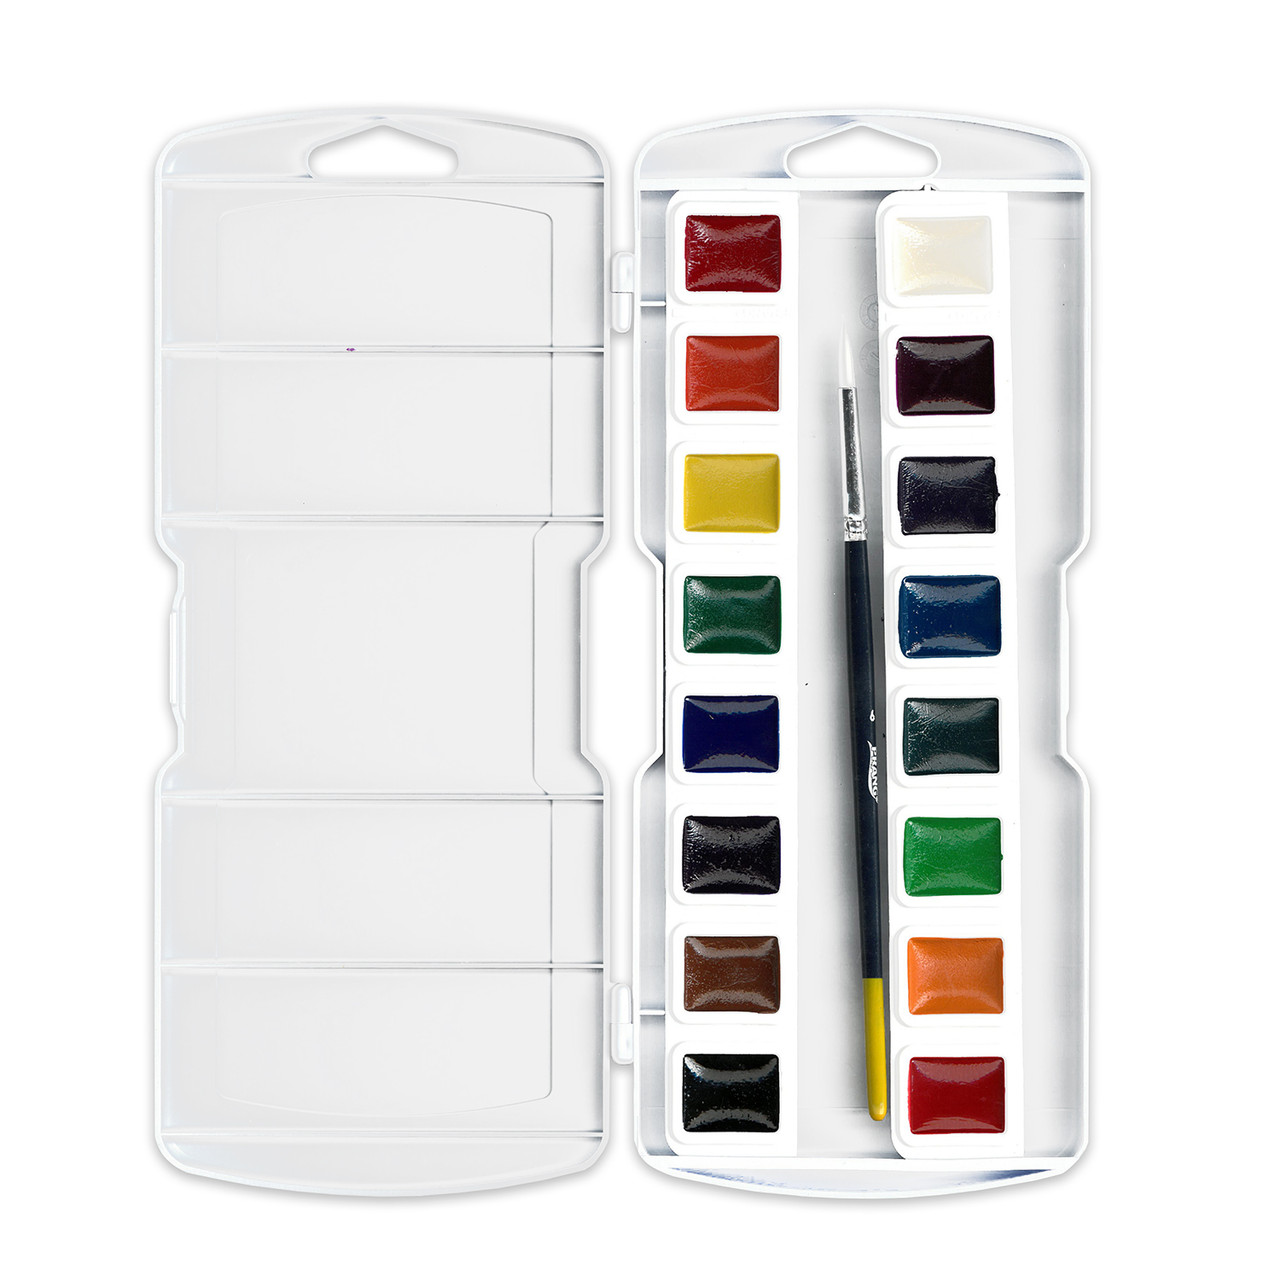 Dixon Ticonderoga Prang oval-16 Pan Watercolor Paint Set, 16 Assorted Colors, Refillable, Includes Brush / 2 Pack